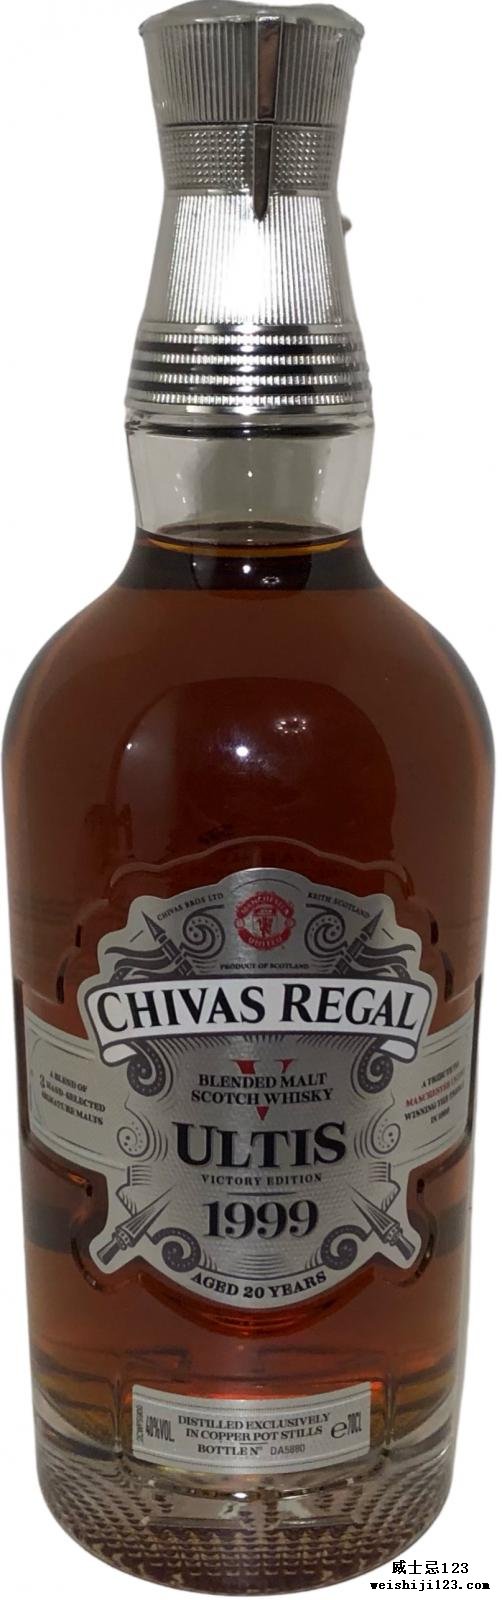 Chivas Regal Ultis 1999 Victory Edition